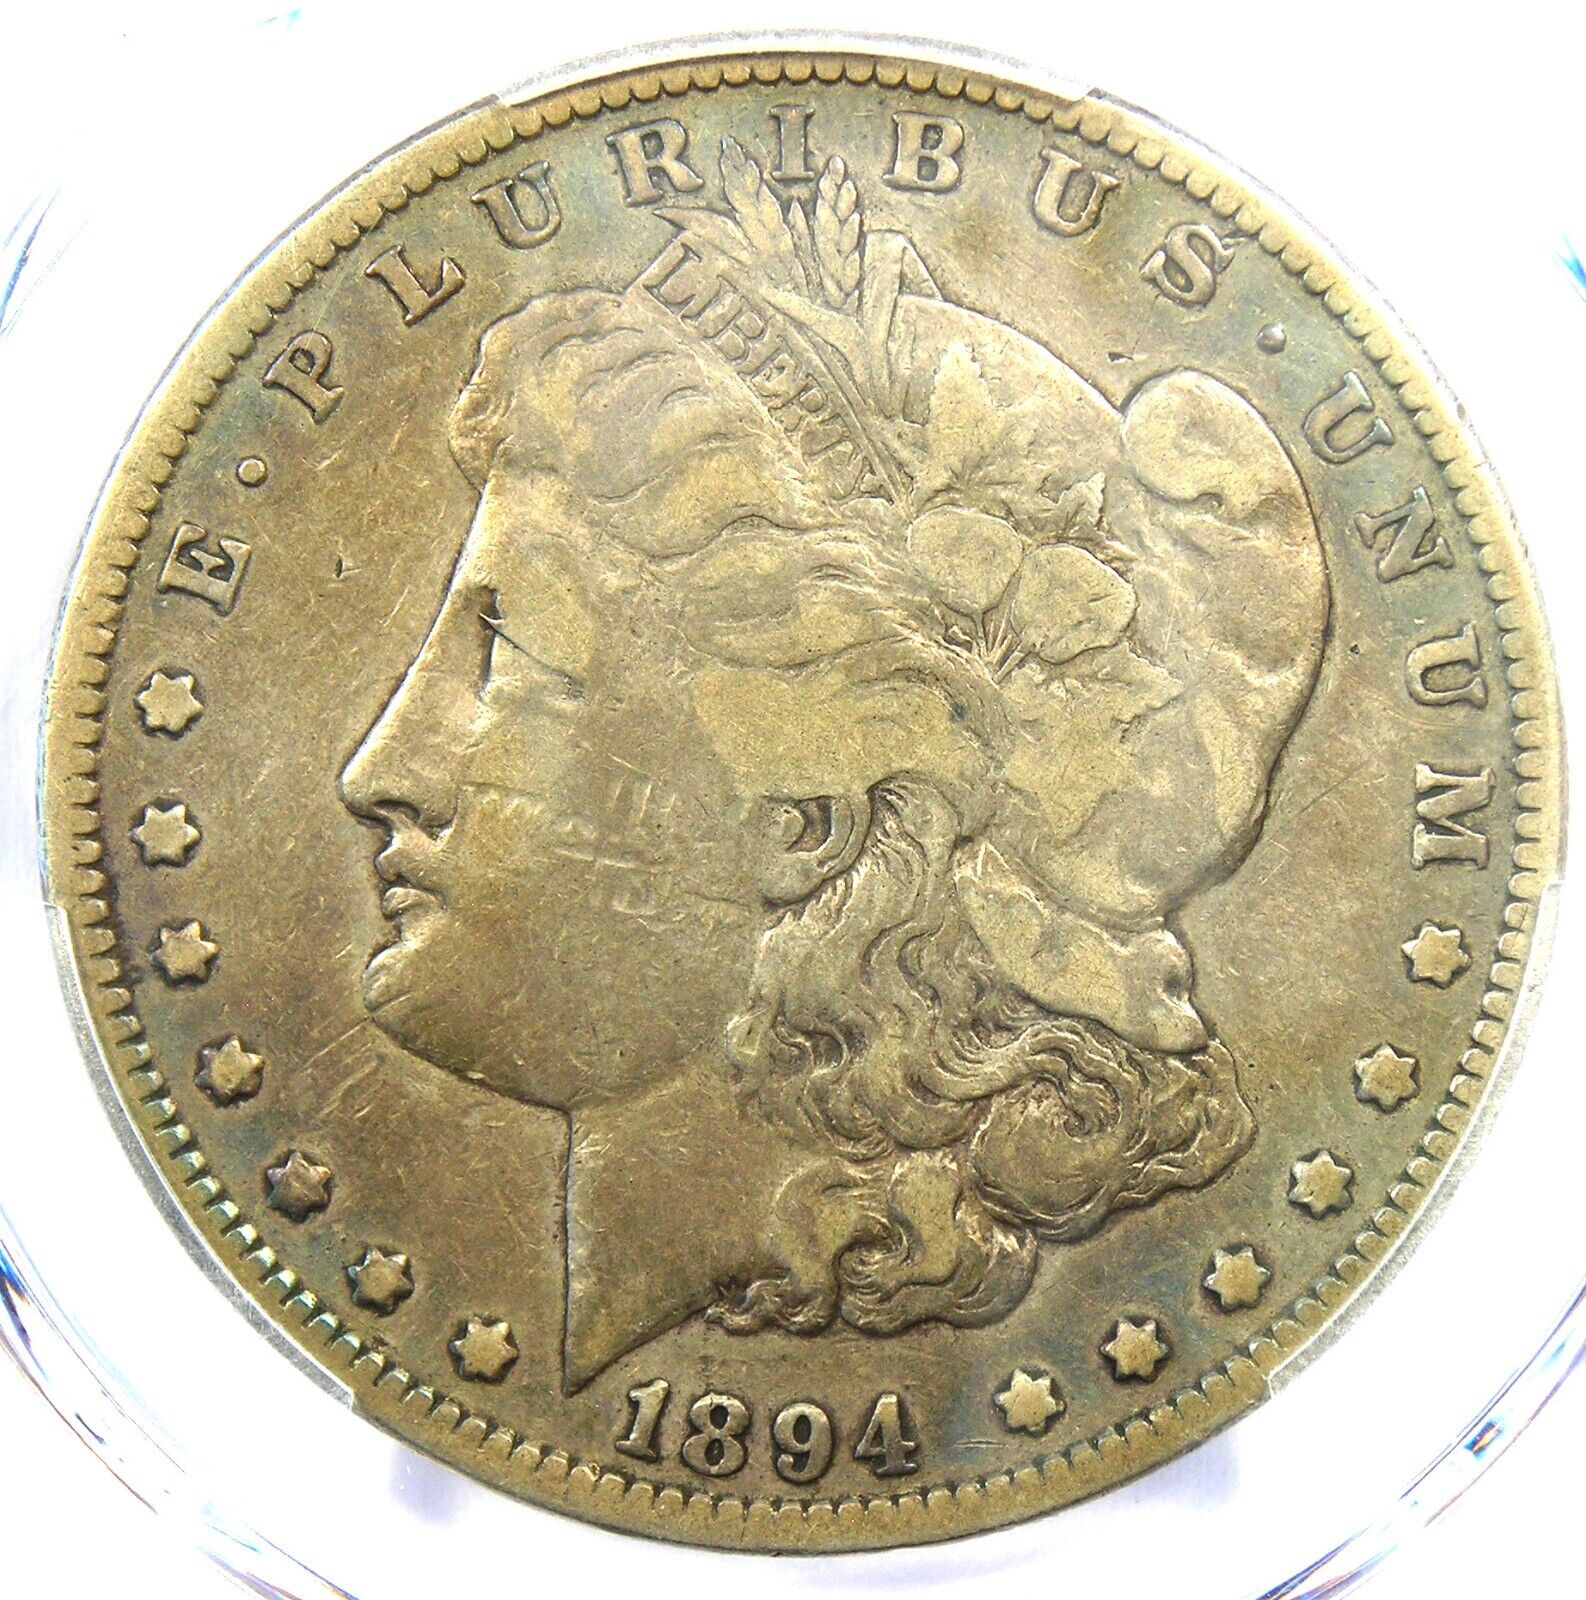 1894-P Morgan Silver Dollar $1 Coin 1894. Certified PCGS Fine Detail - Rare Date